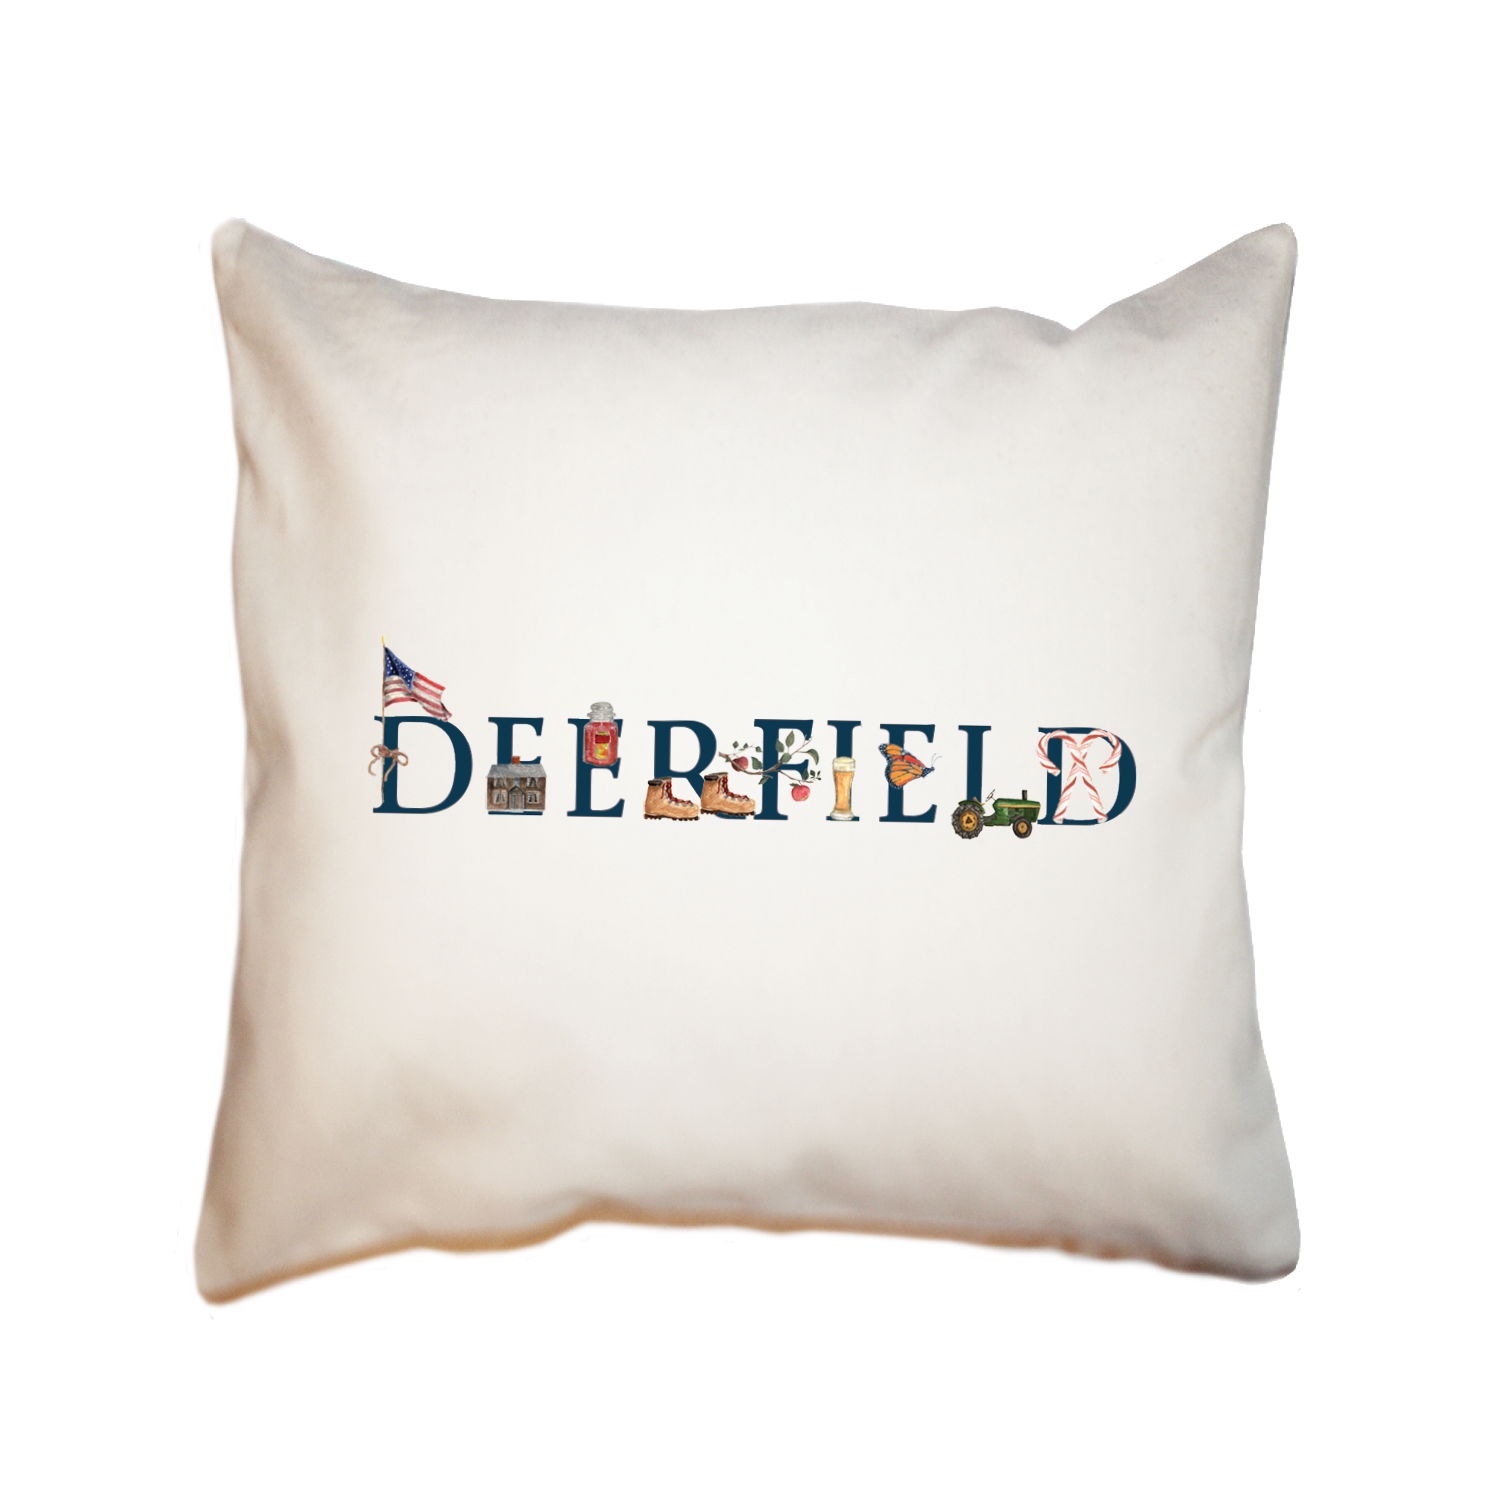 deerfield square pillow